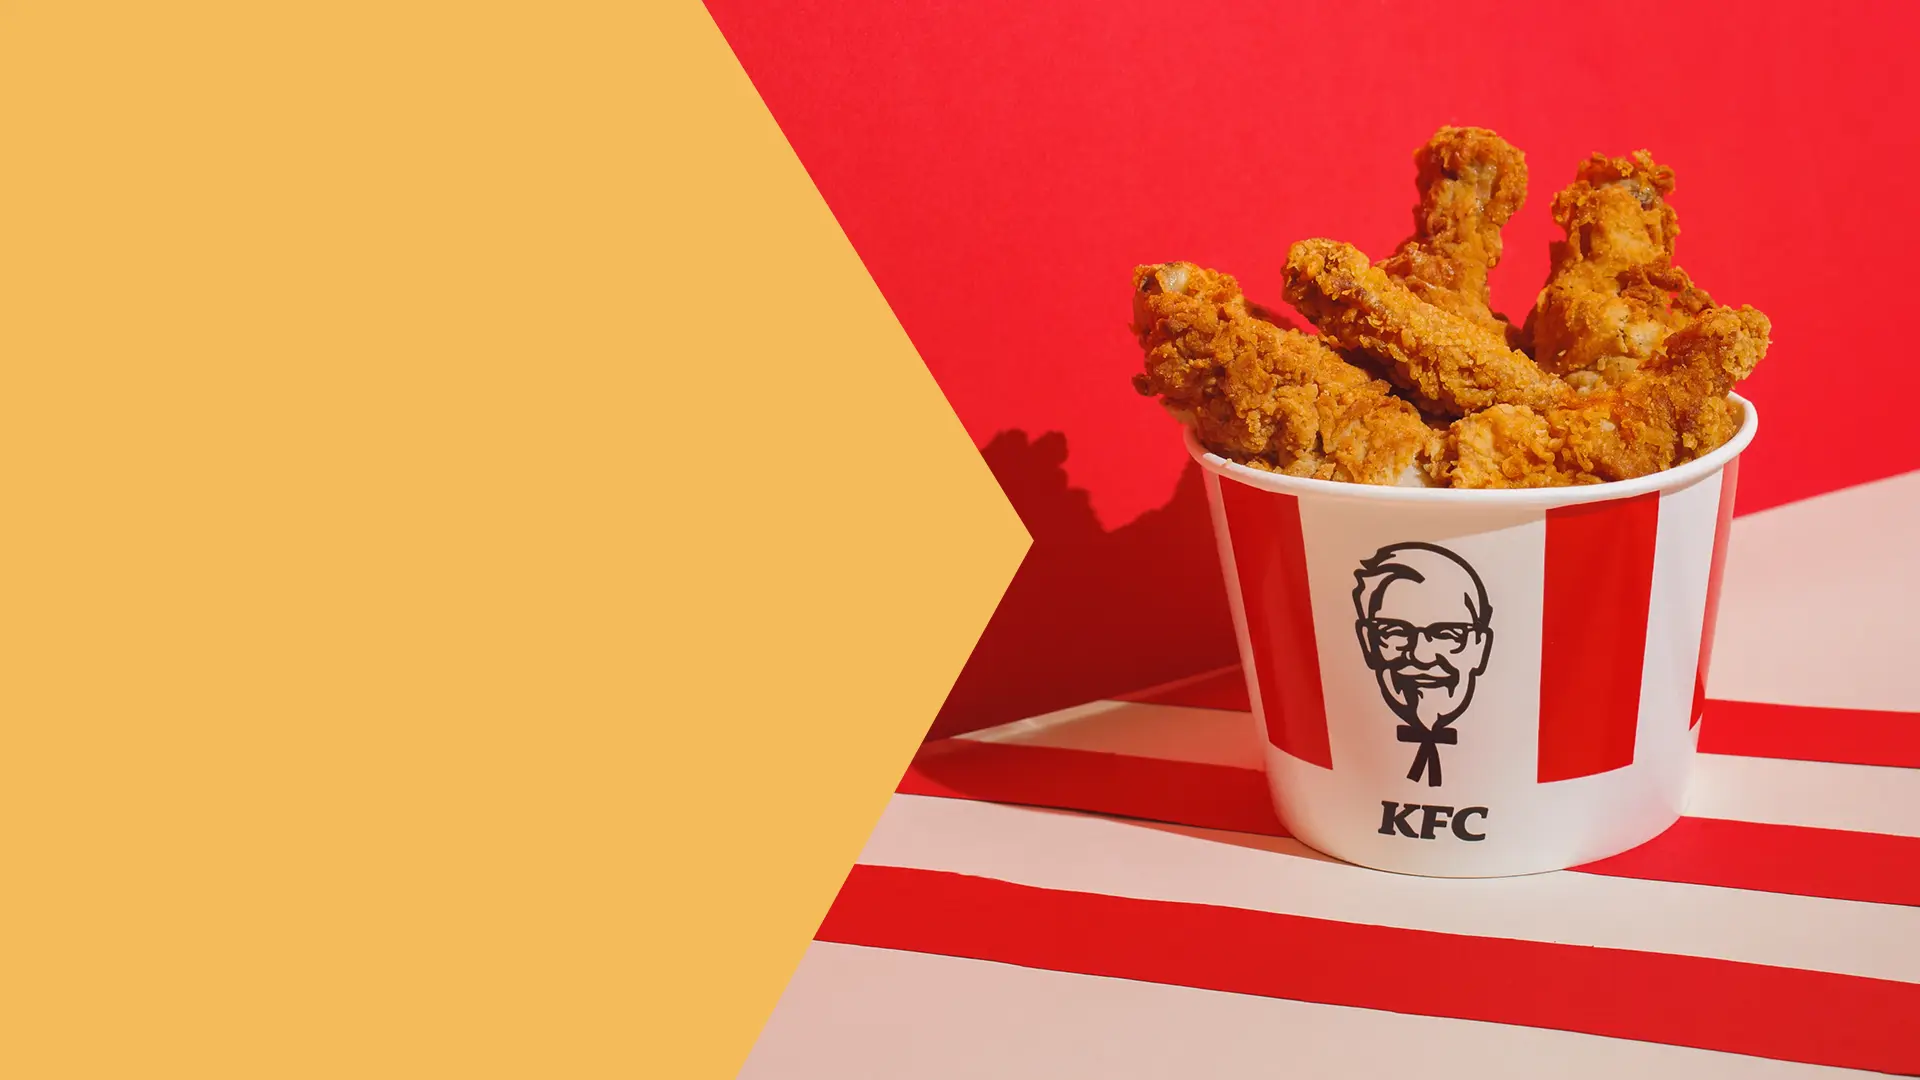 Brand Stories - KFC